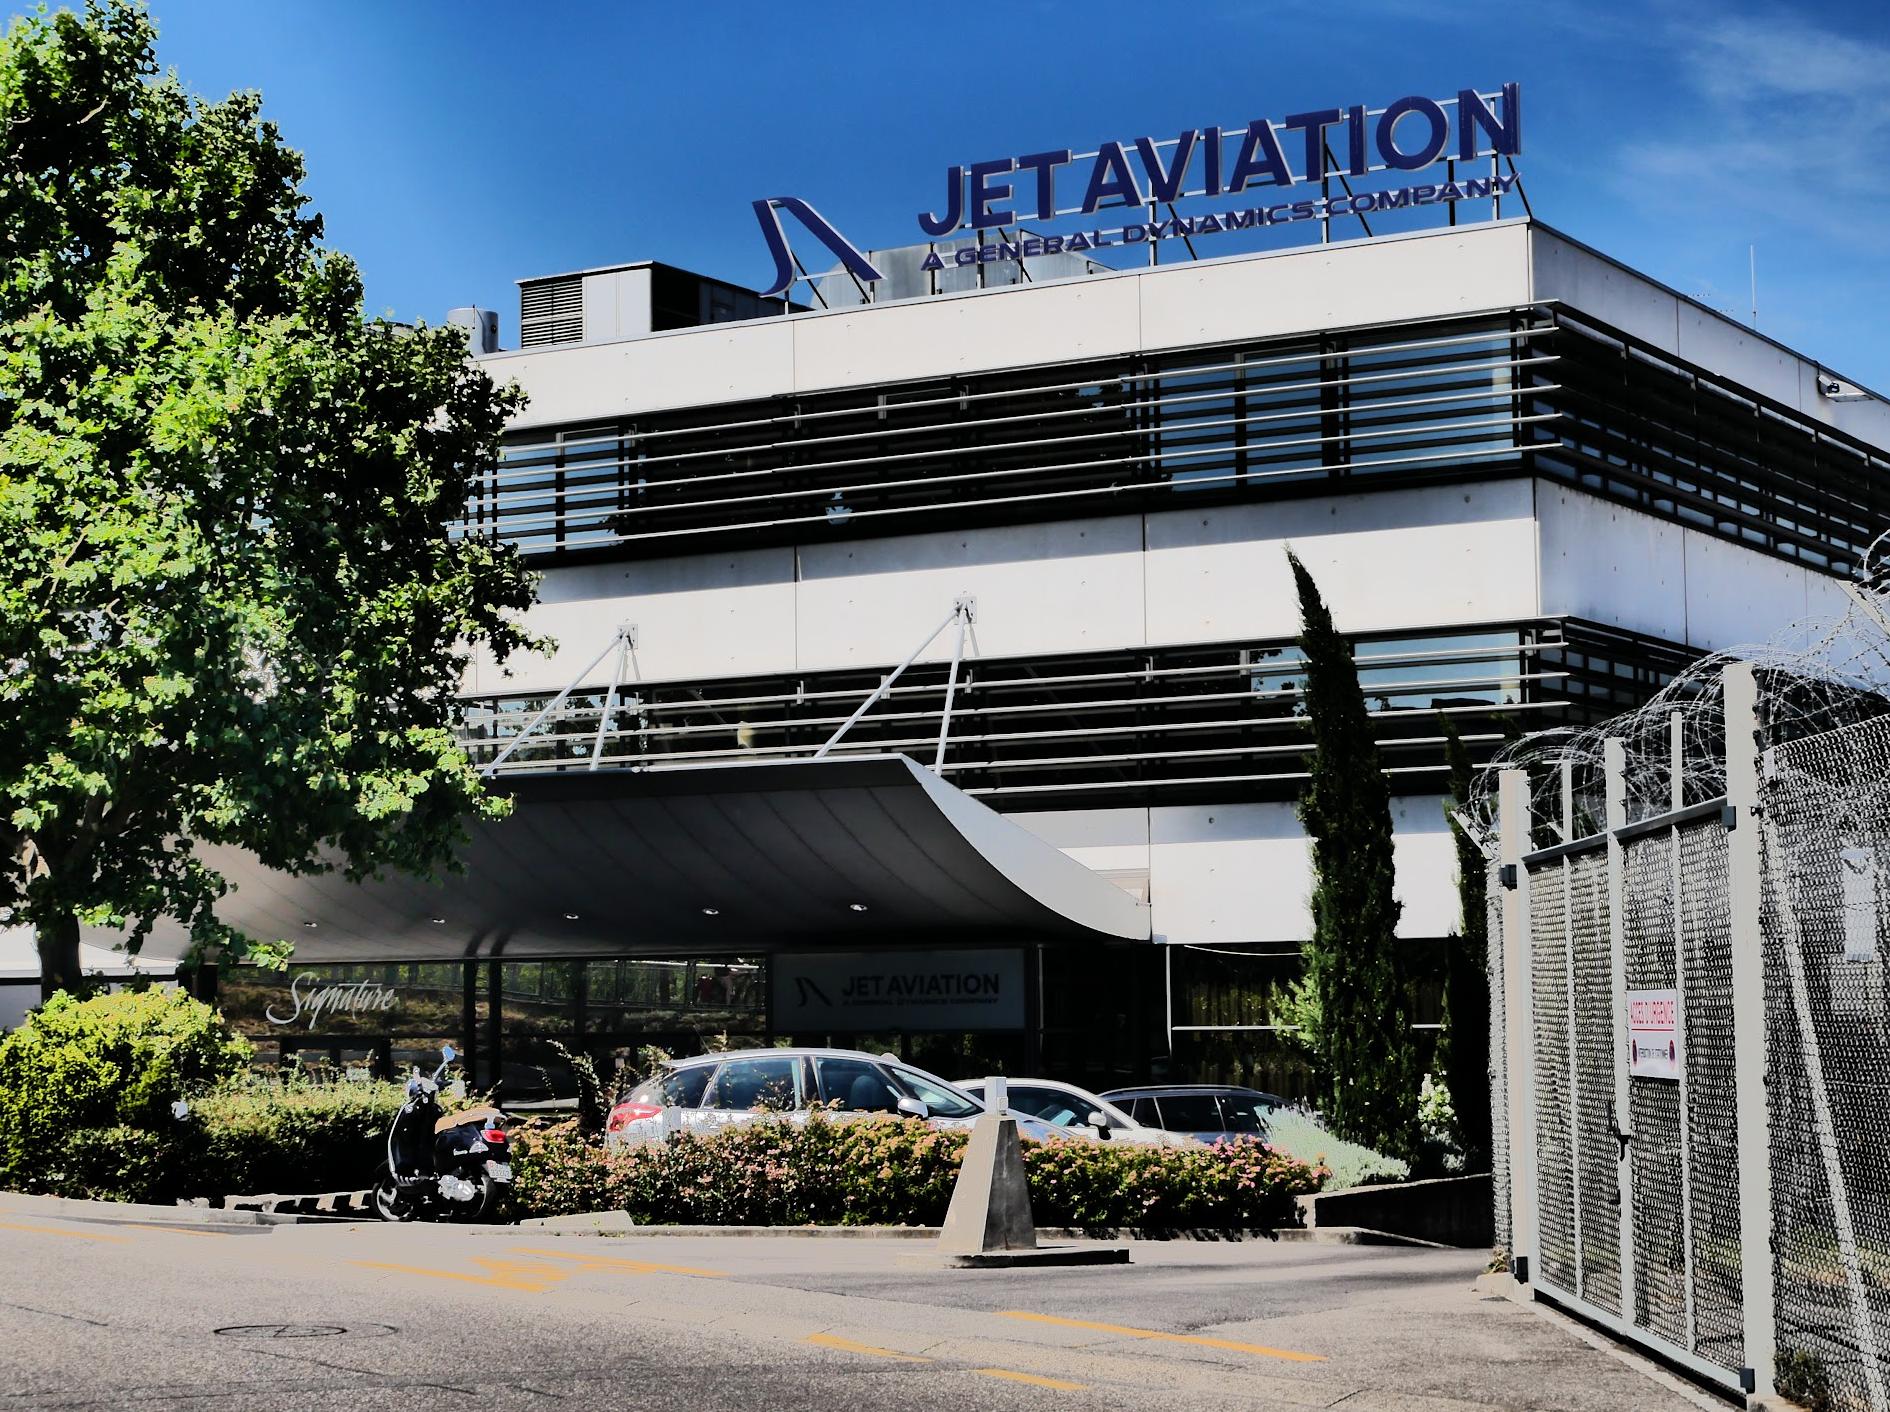 Jet Aviation Geneva FBO